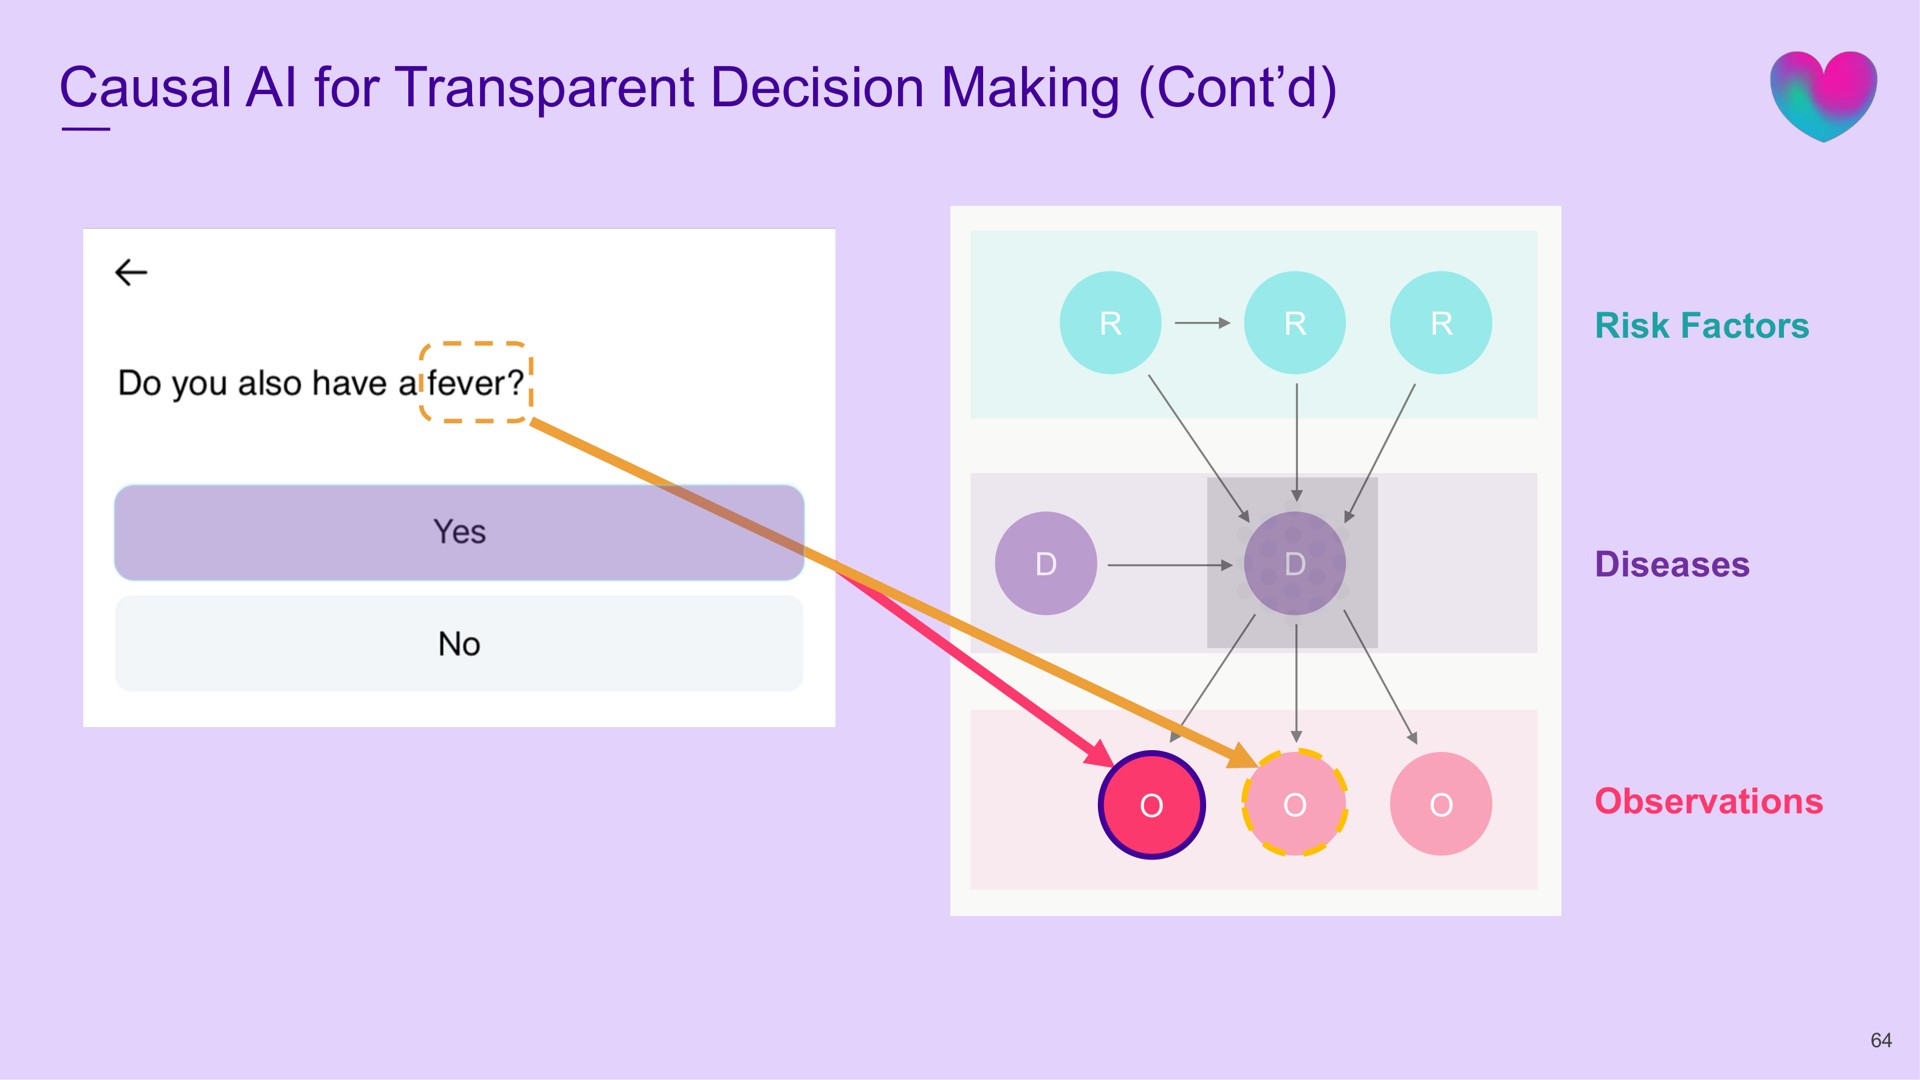 causal for transparent decision making | Babylon